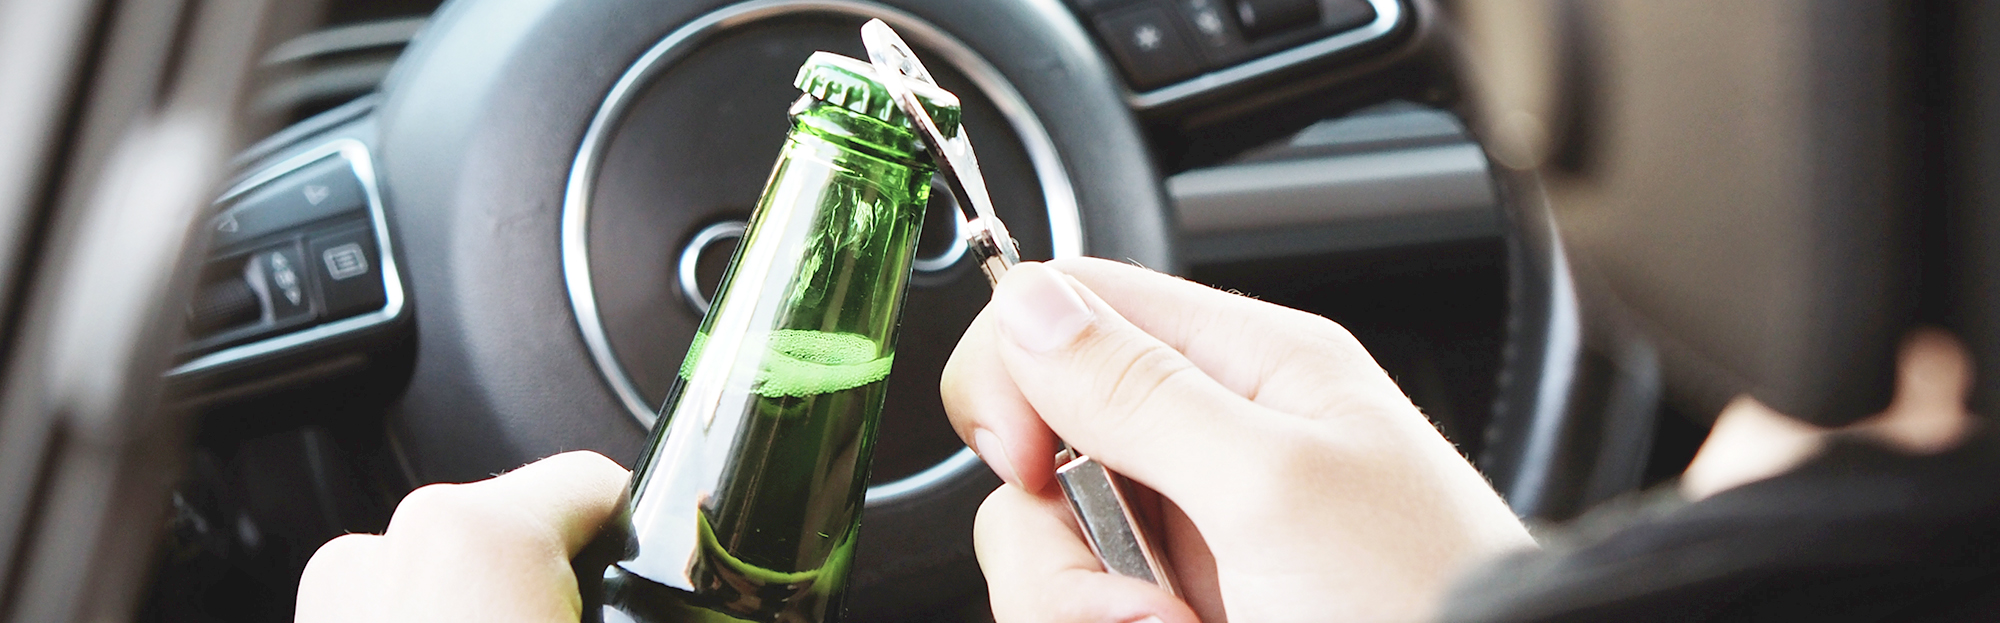 Motorist opens beer bottle inside car prior to start driving.